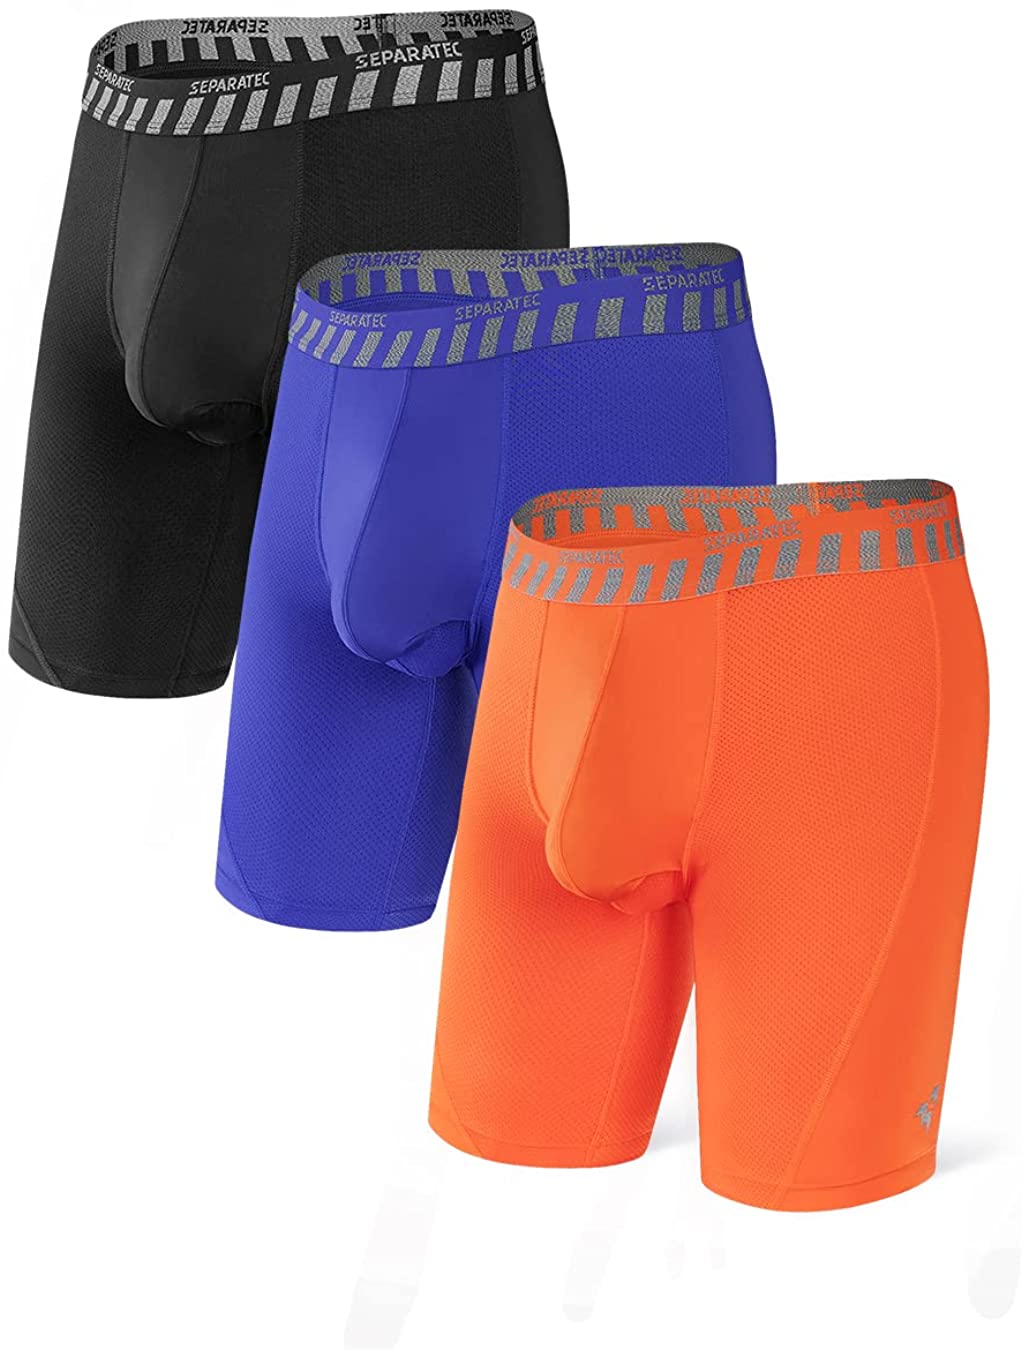 Separatec Men's Quick Dry Sport Performance Dual Pouch Boxer Long Leg  Underwear - AliExpress